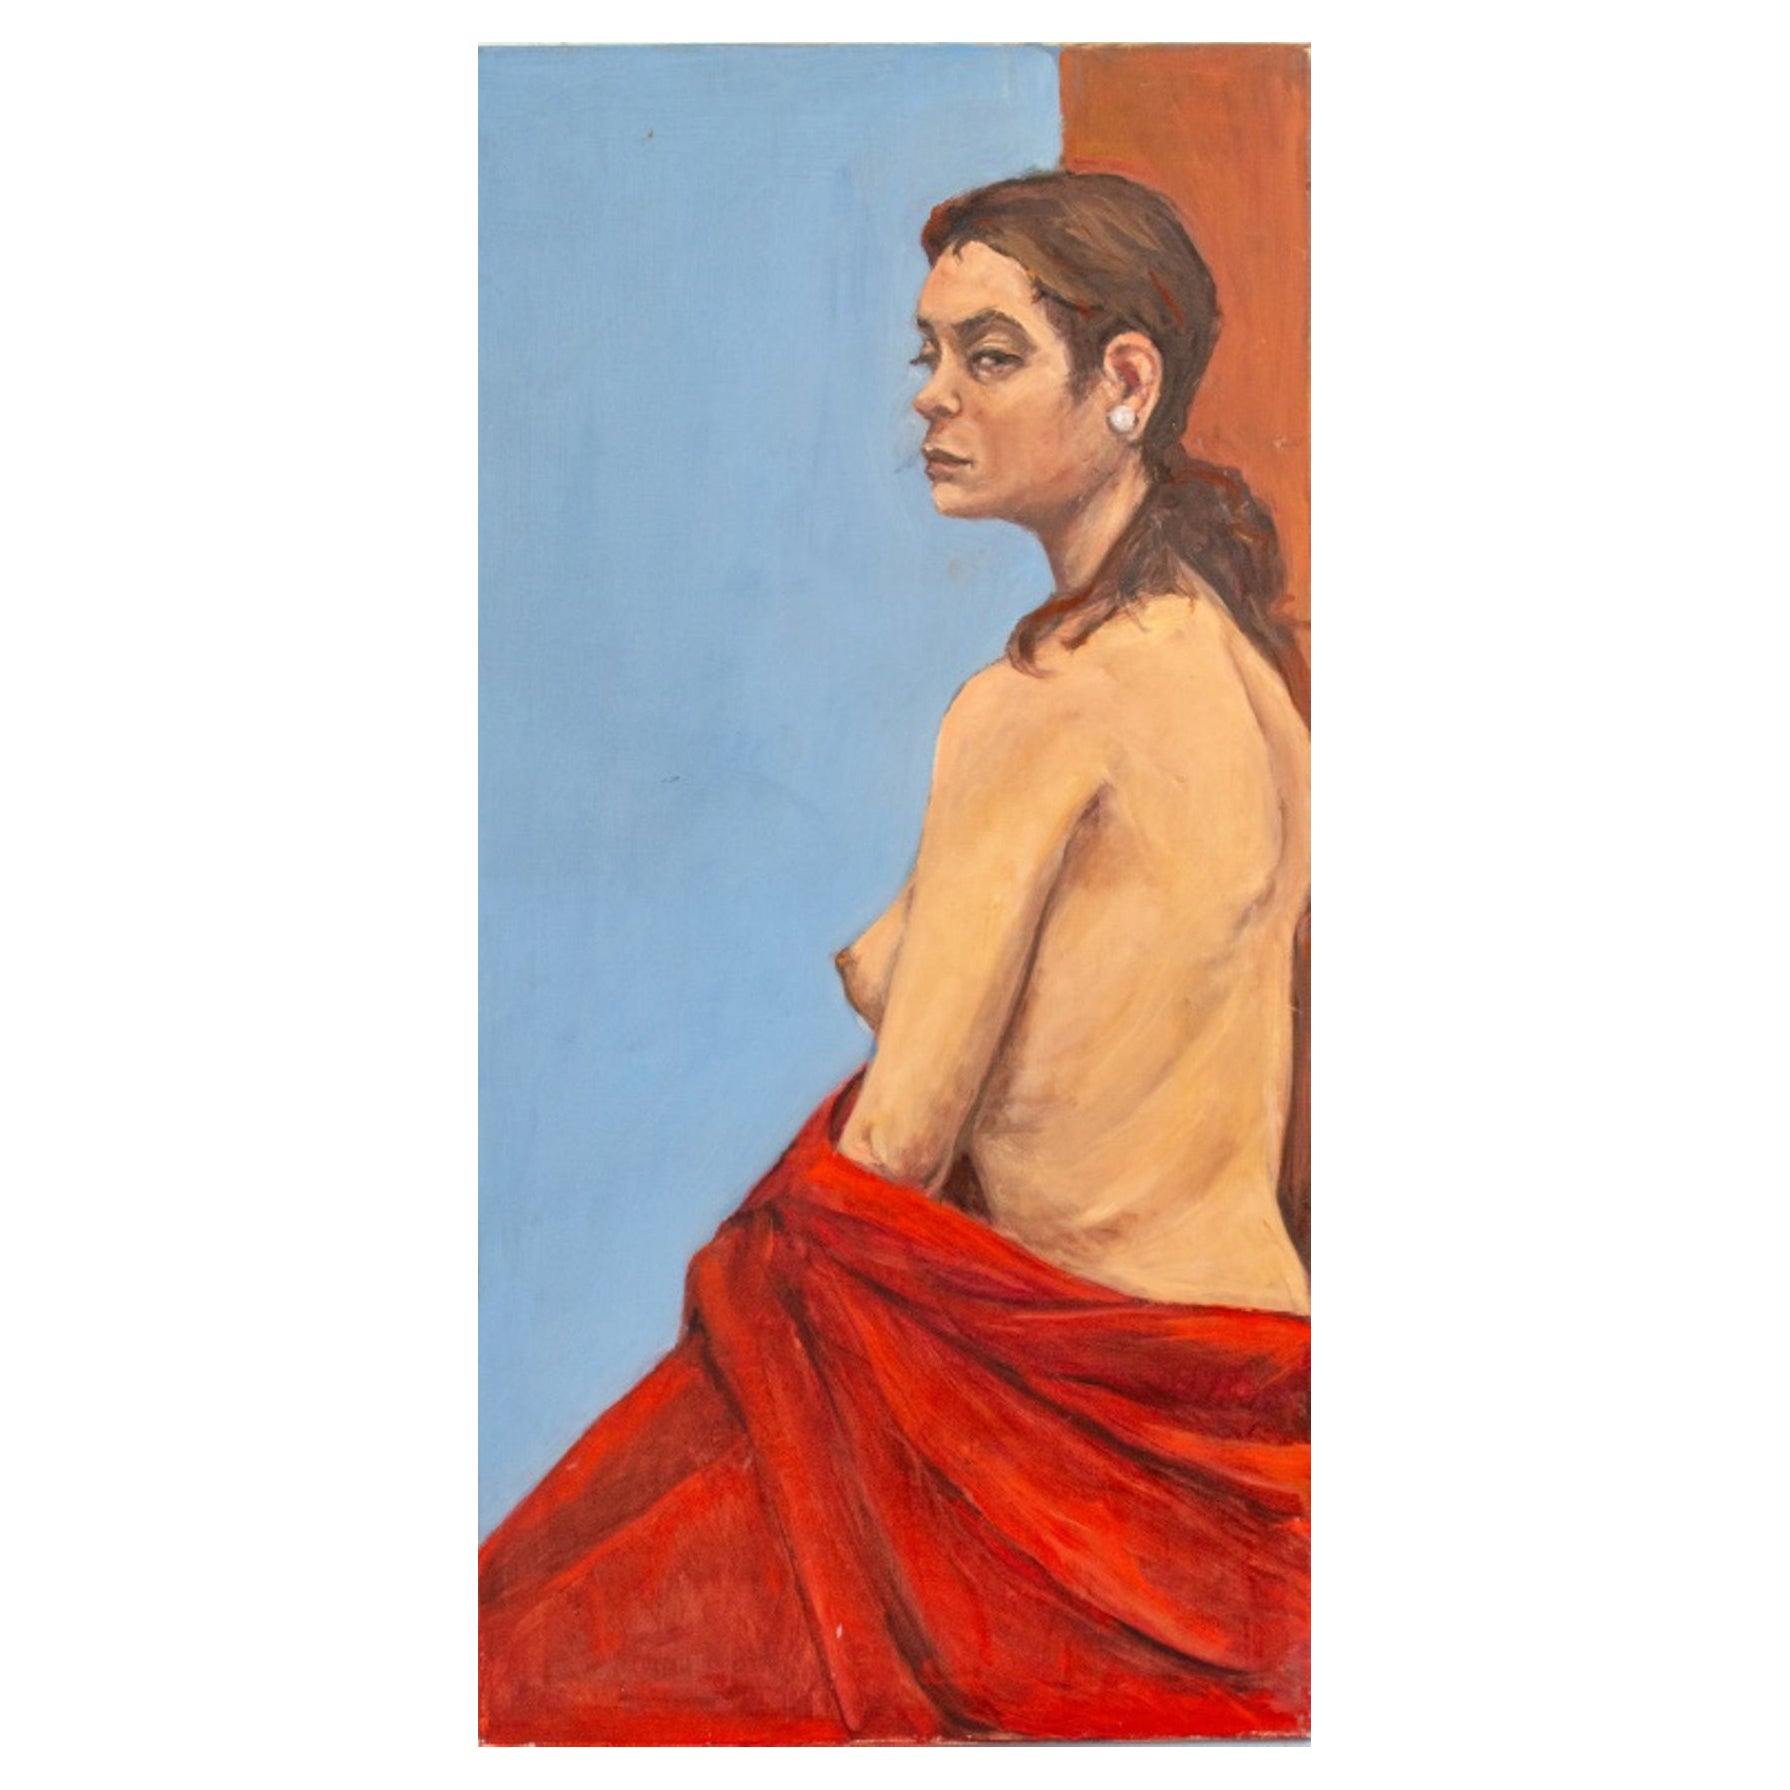 Penny Purpura Nude Woman Portrait Oil Painting For Sale